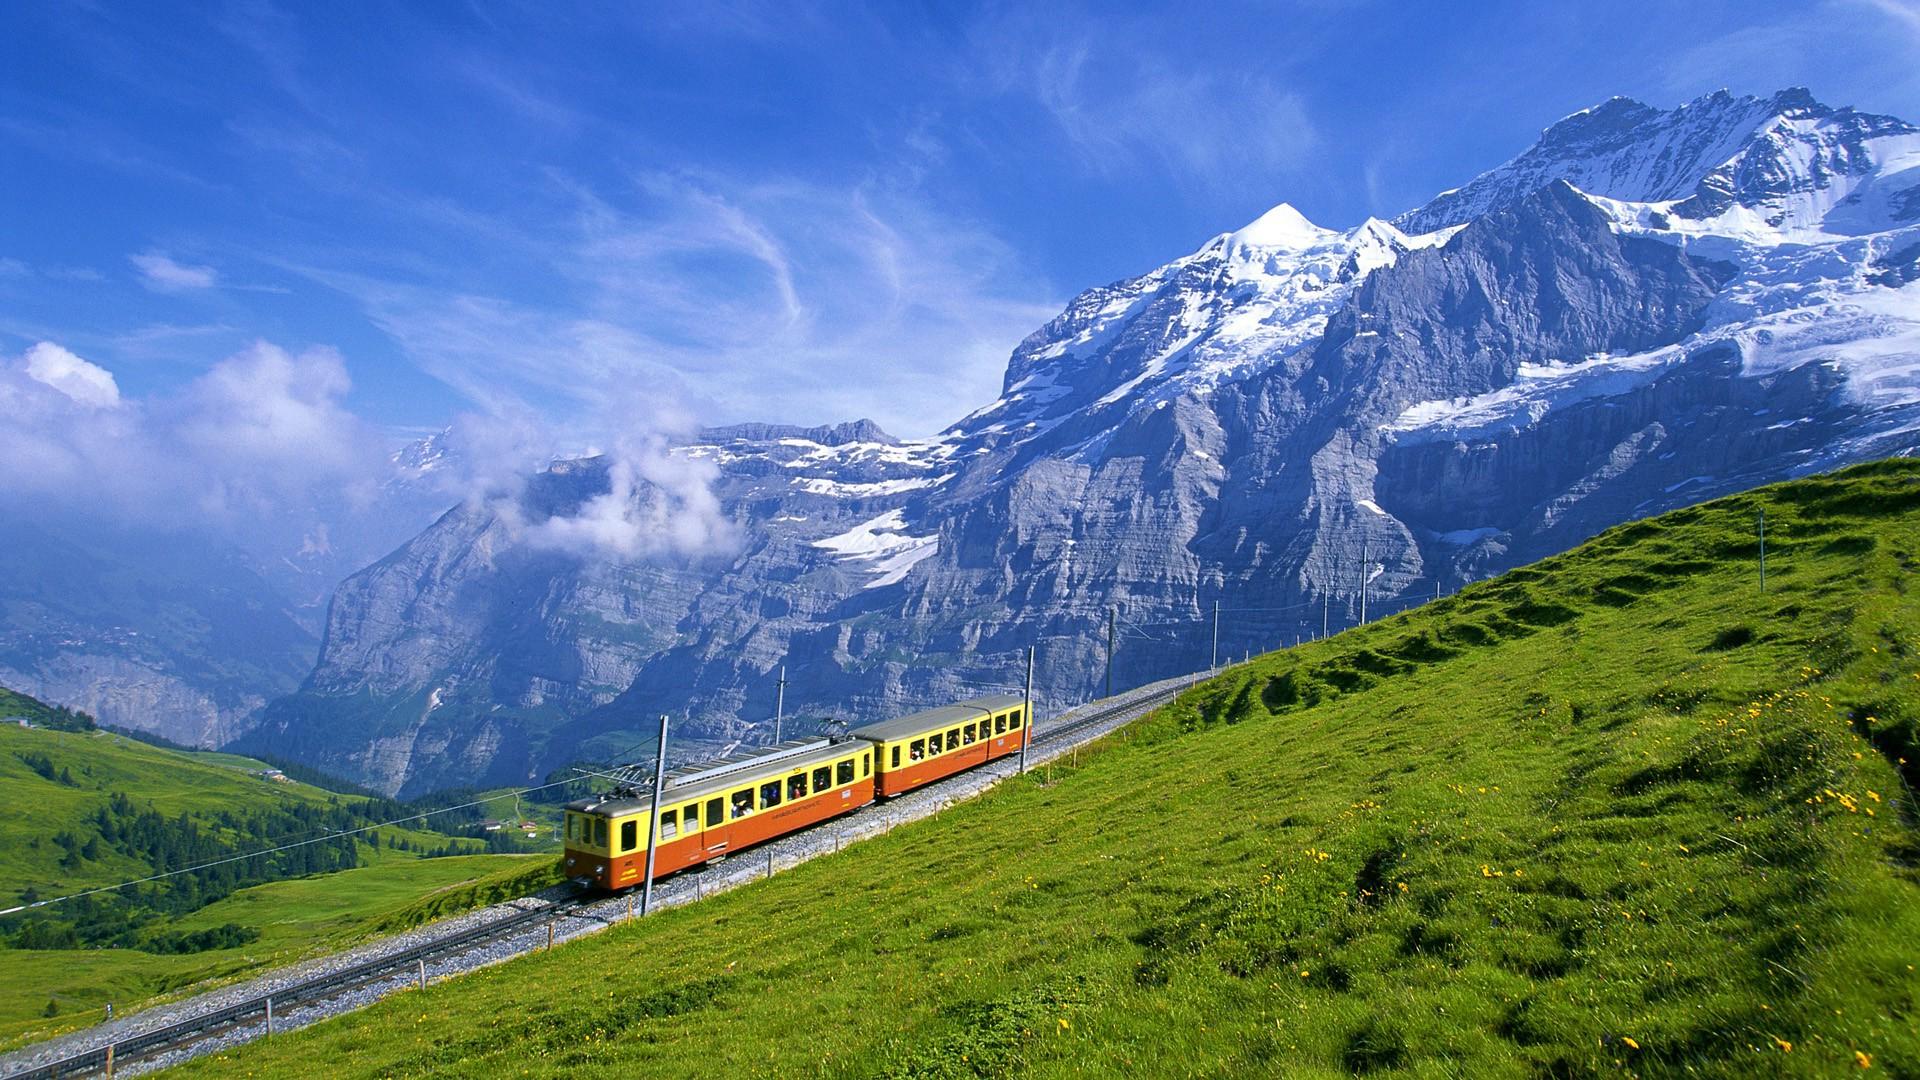 mountains, landscapes, nature, snow, grass, trains, vehicles